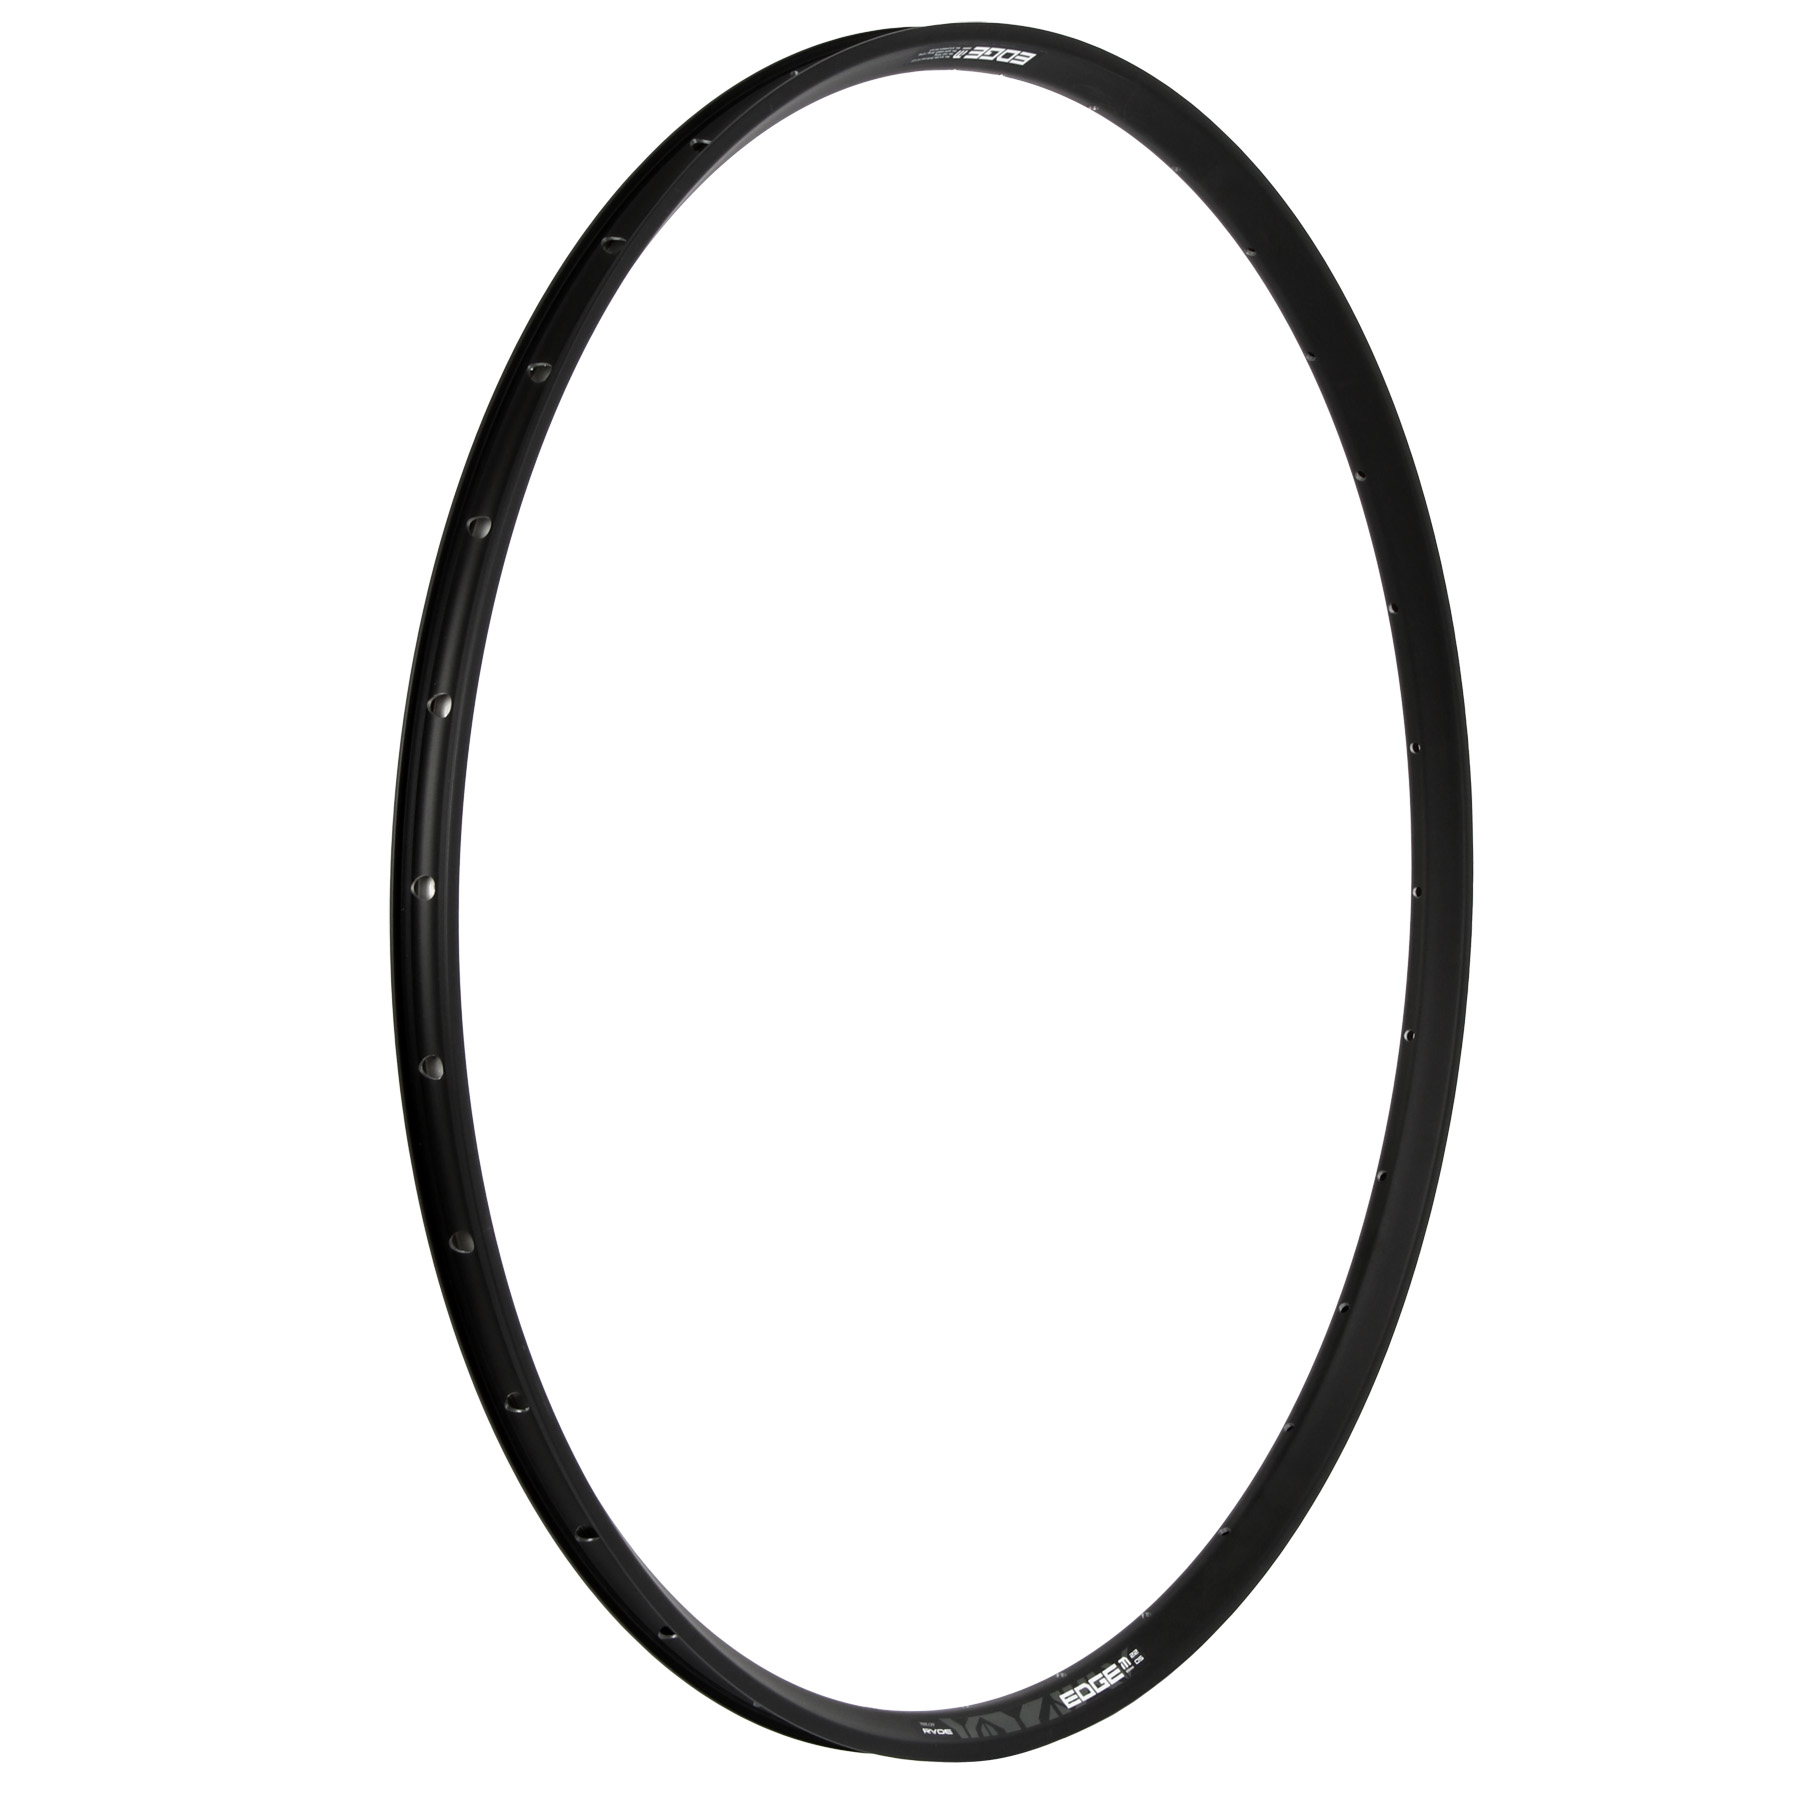 Productfoto van Ryde Edge M 22 OS - 29 Inch Disc Clincher Rim - black